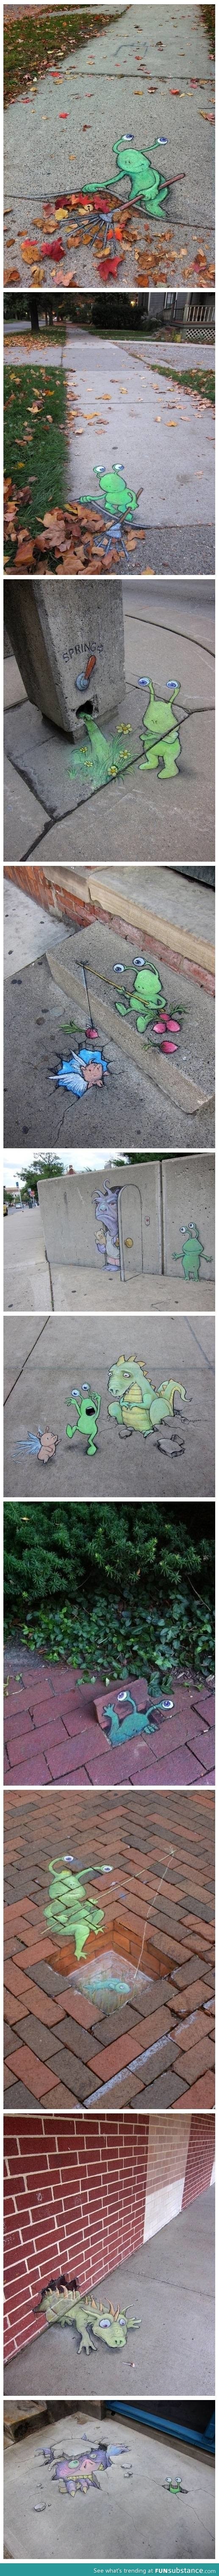 Awesome chalk art by David Zinn